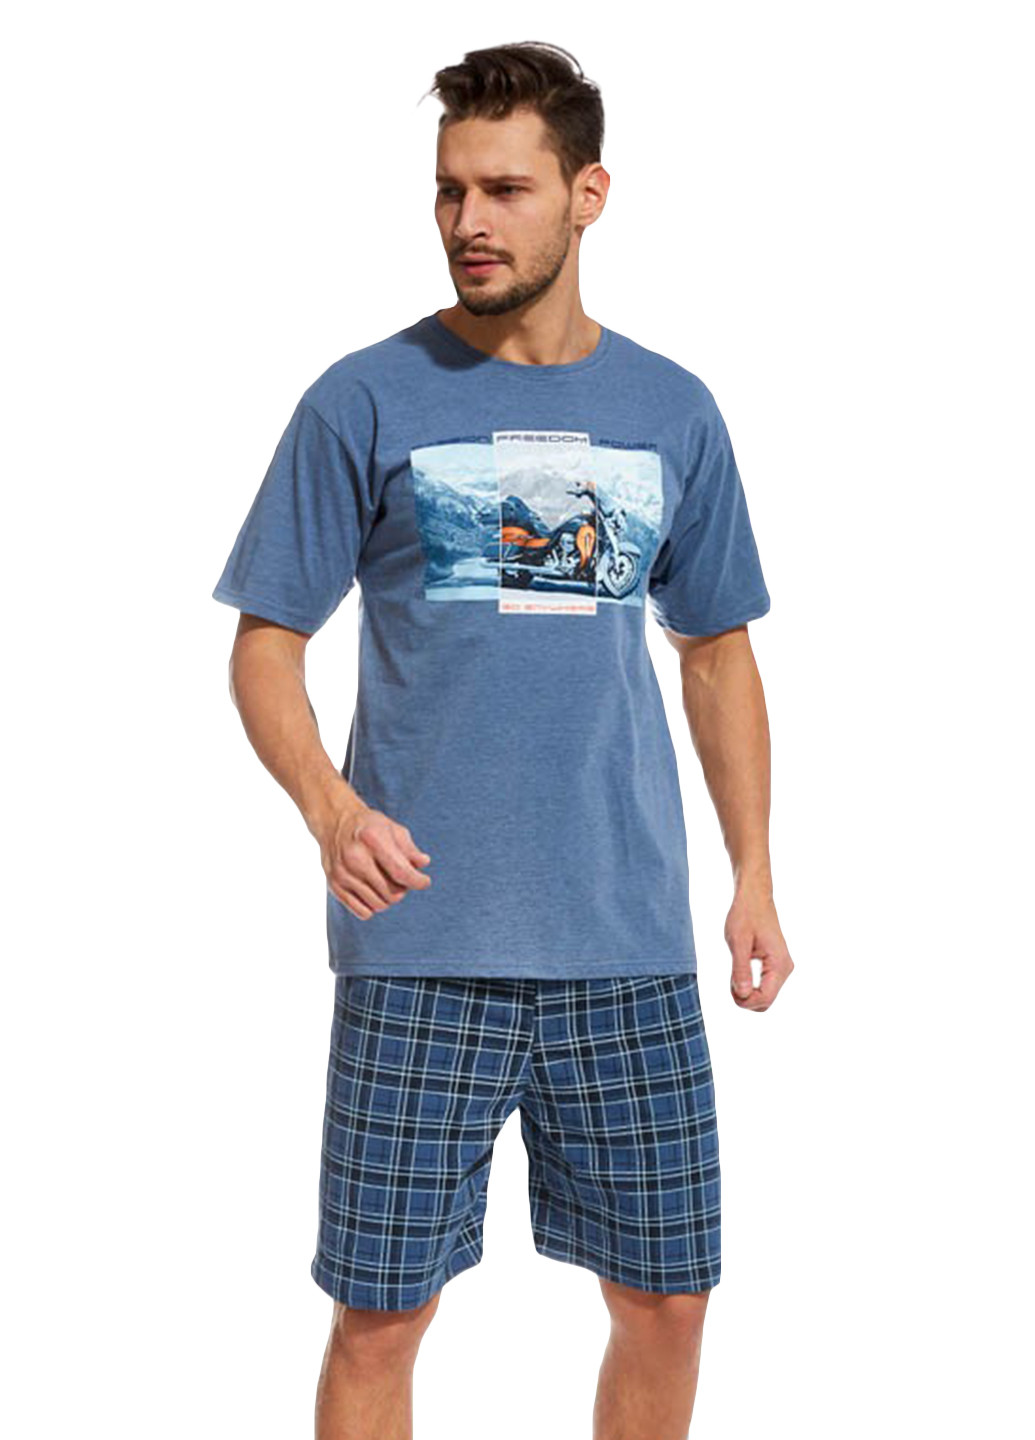 Пижама (футболка, шорты) Cornette рисунок синяя домашняя